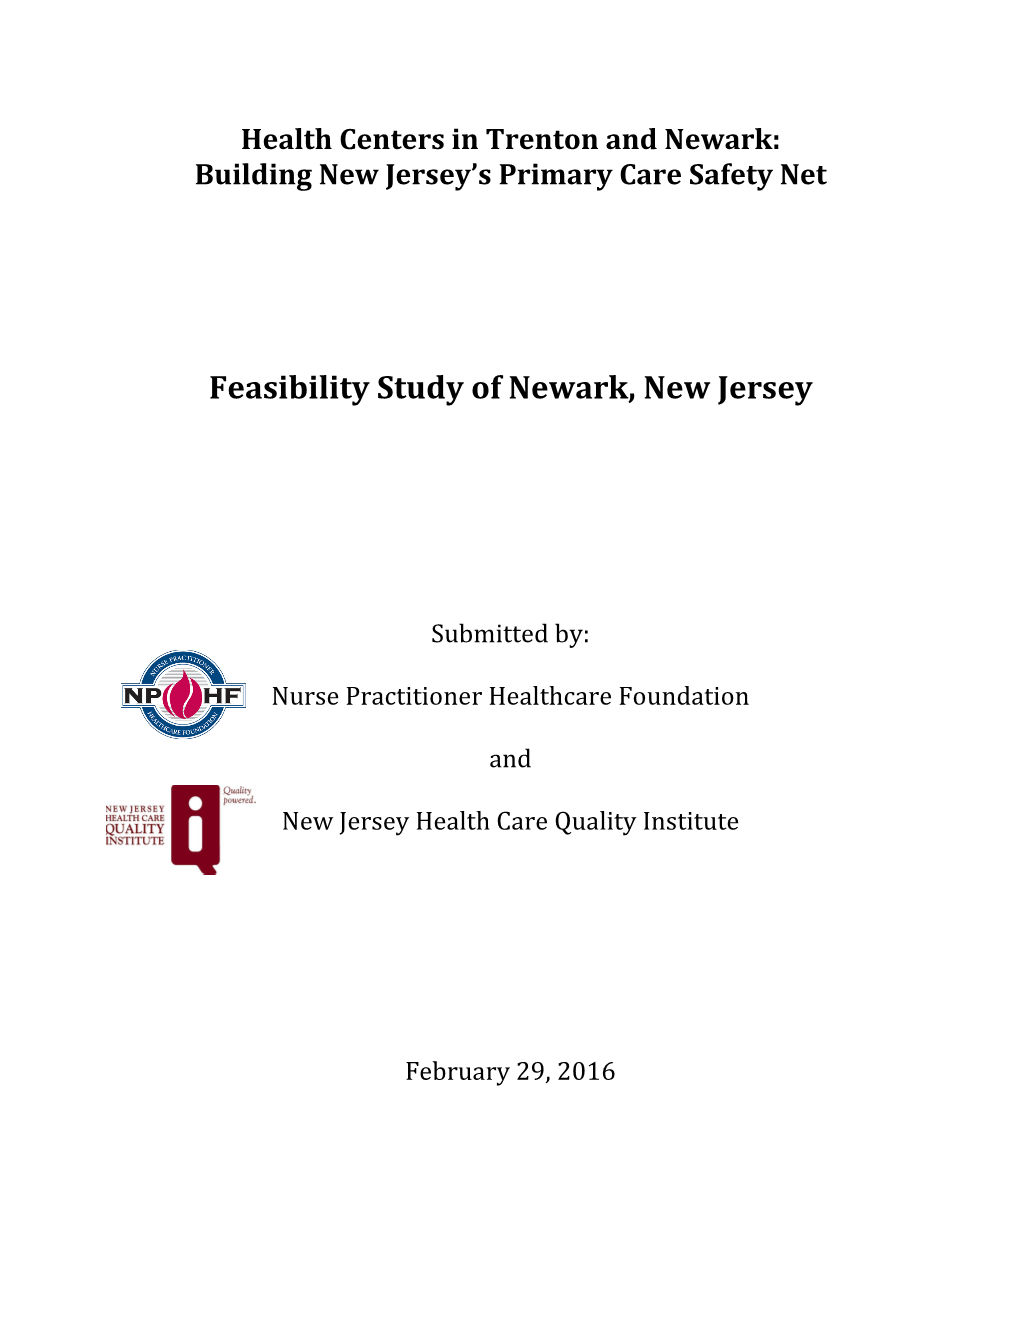 Feasibility Study of Newark, New Jersey